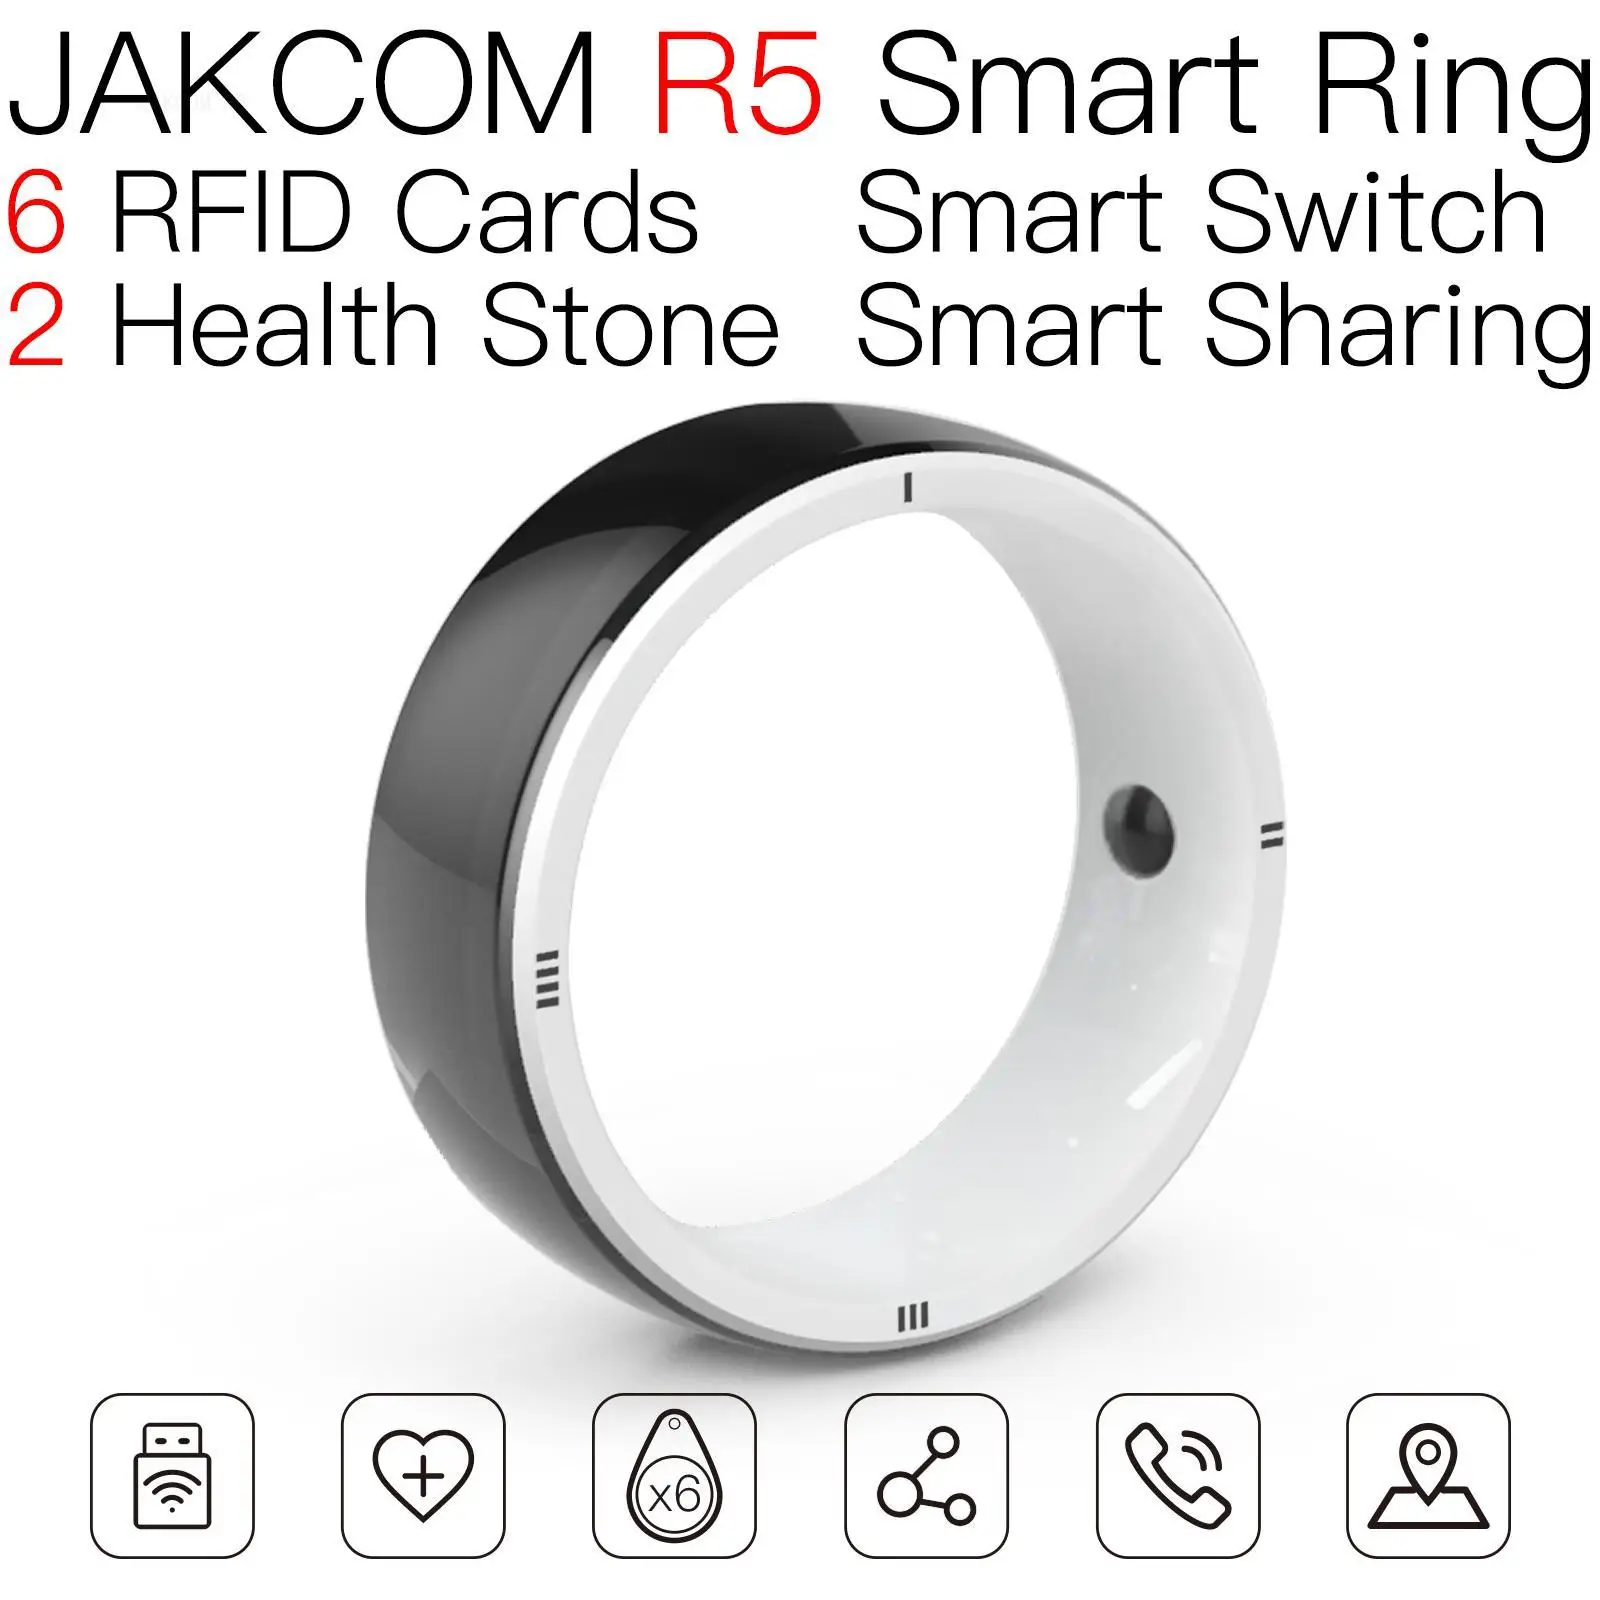 

JAKCOM R5 Smart Ring Super value than proximity 215 alien ties id sticker serial anleon s2 mini penknife high voltage usb